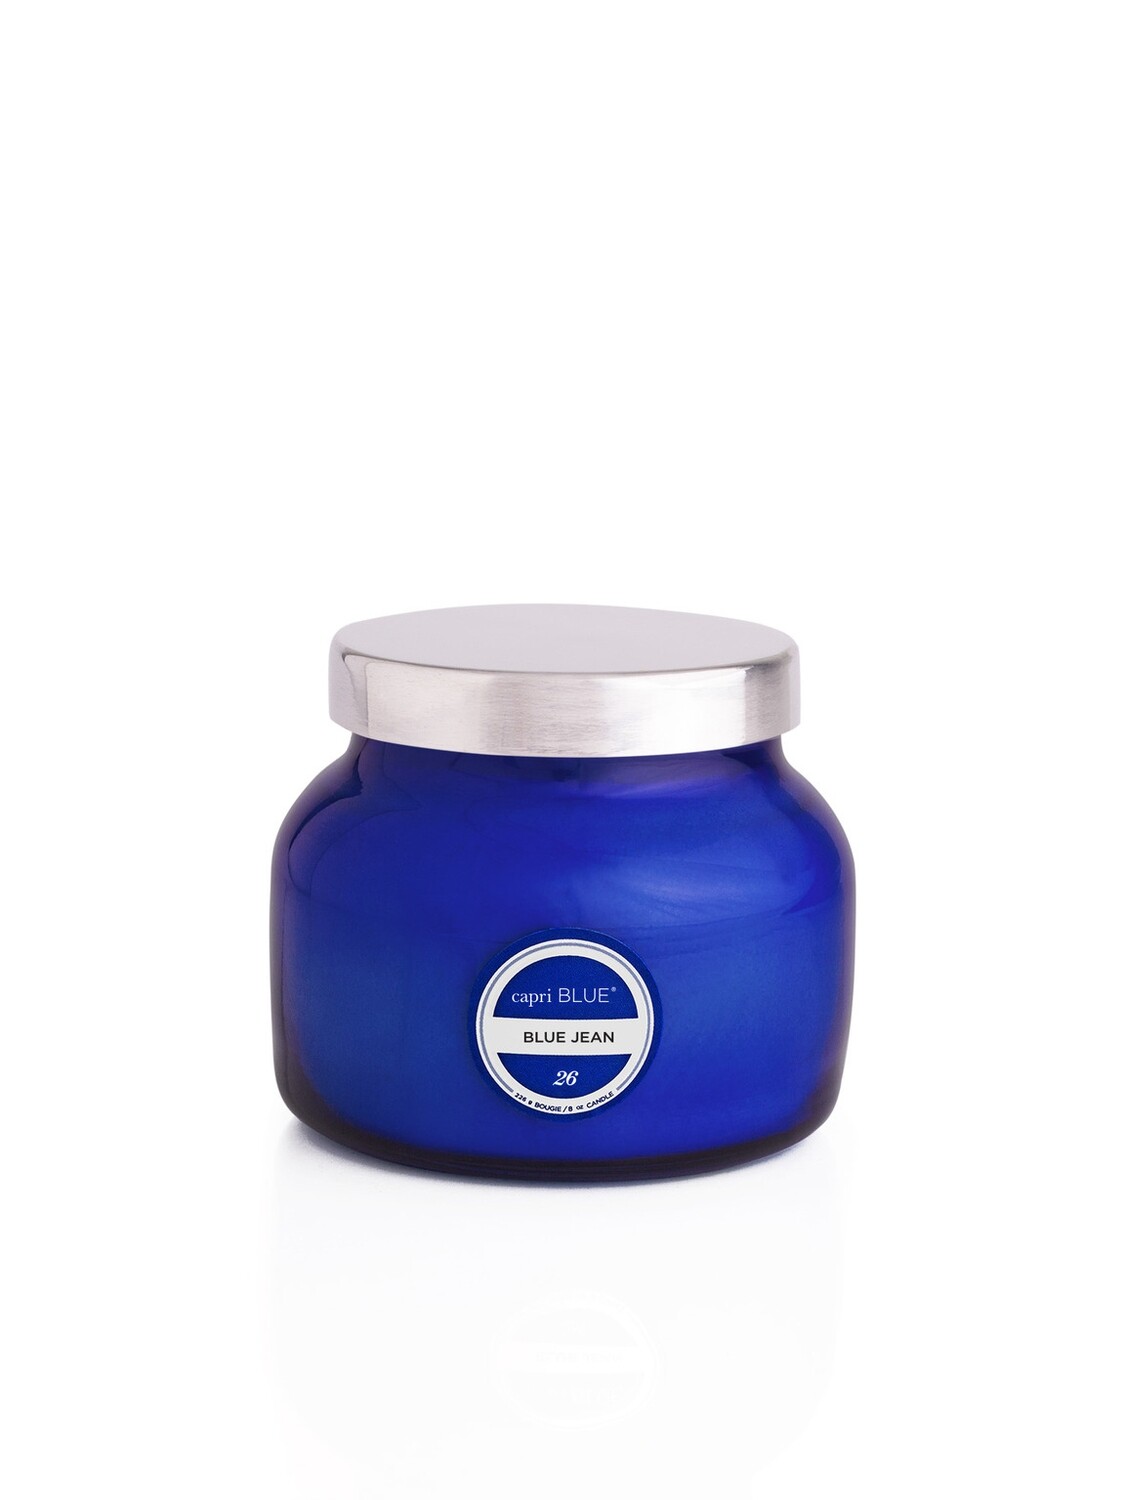 Blue Jean Candle - Capri Blue Petite Jar 8oz